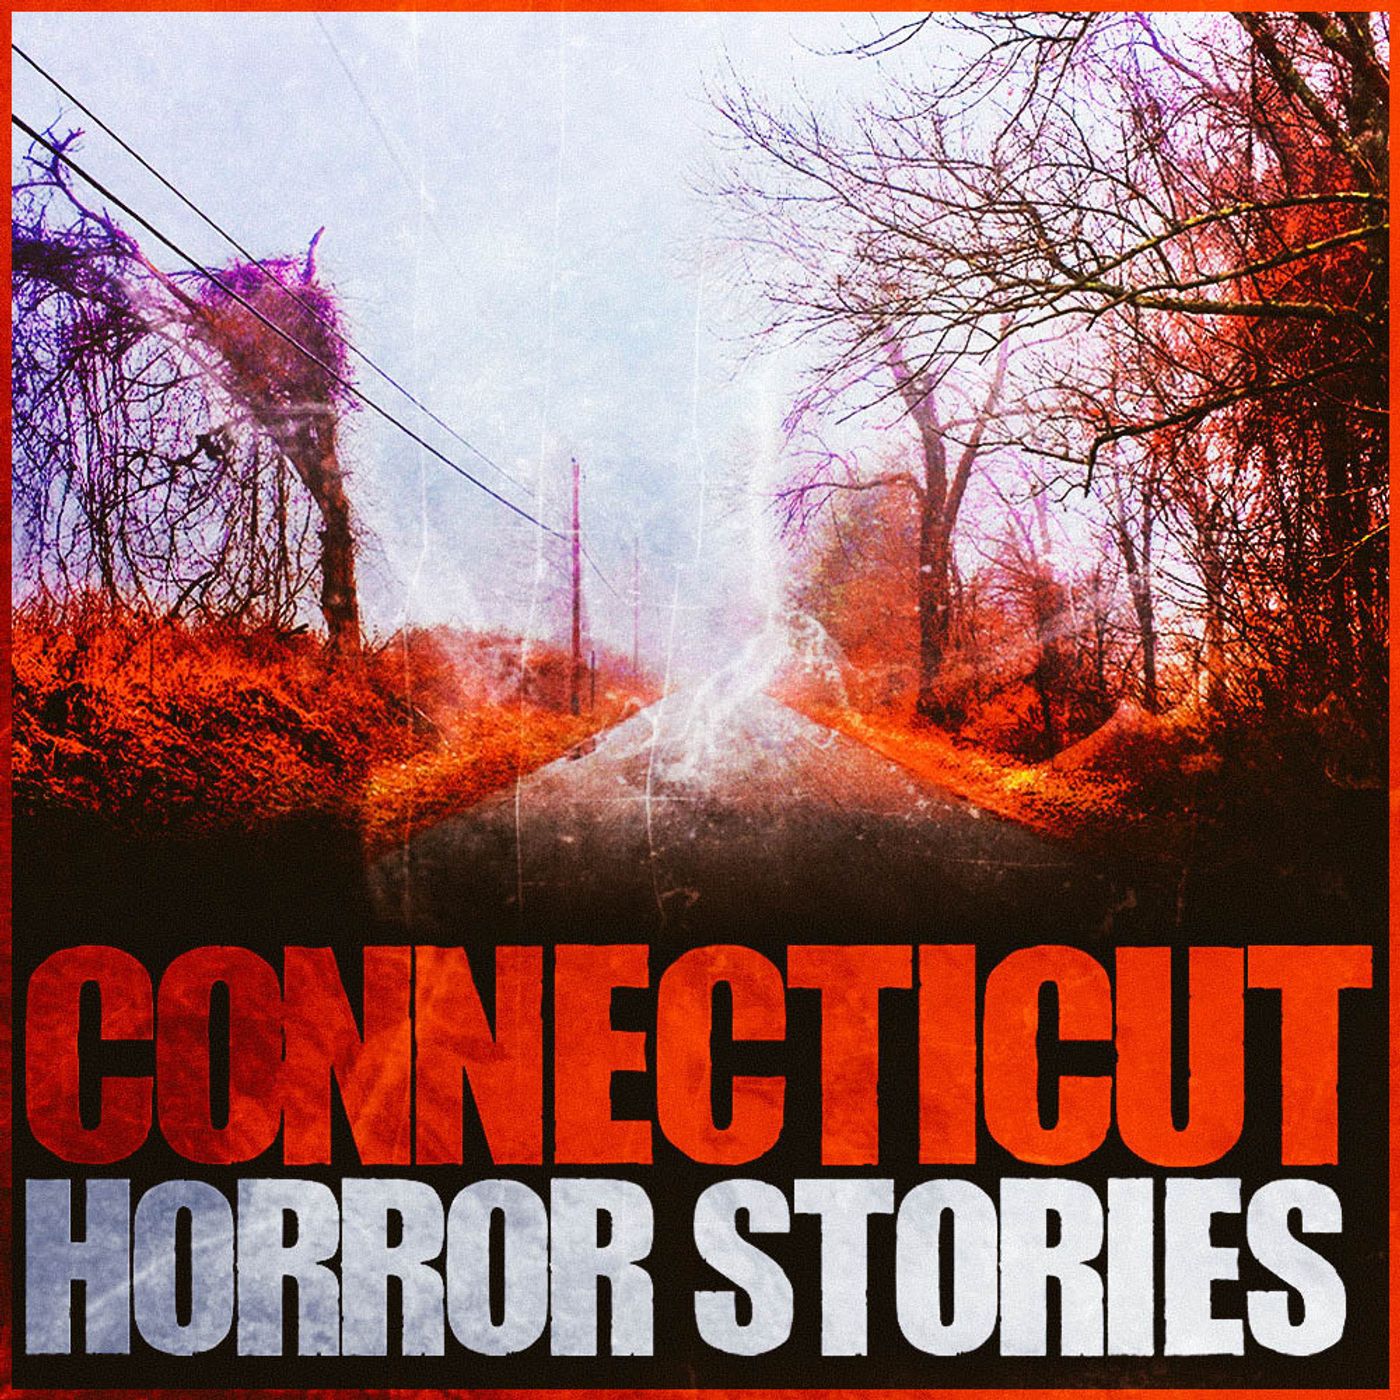 670: Connecticut Horror Stories | The Dark Swamp Ep 670